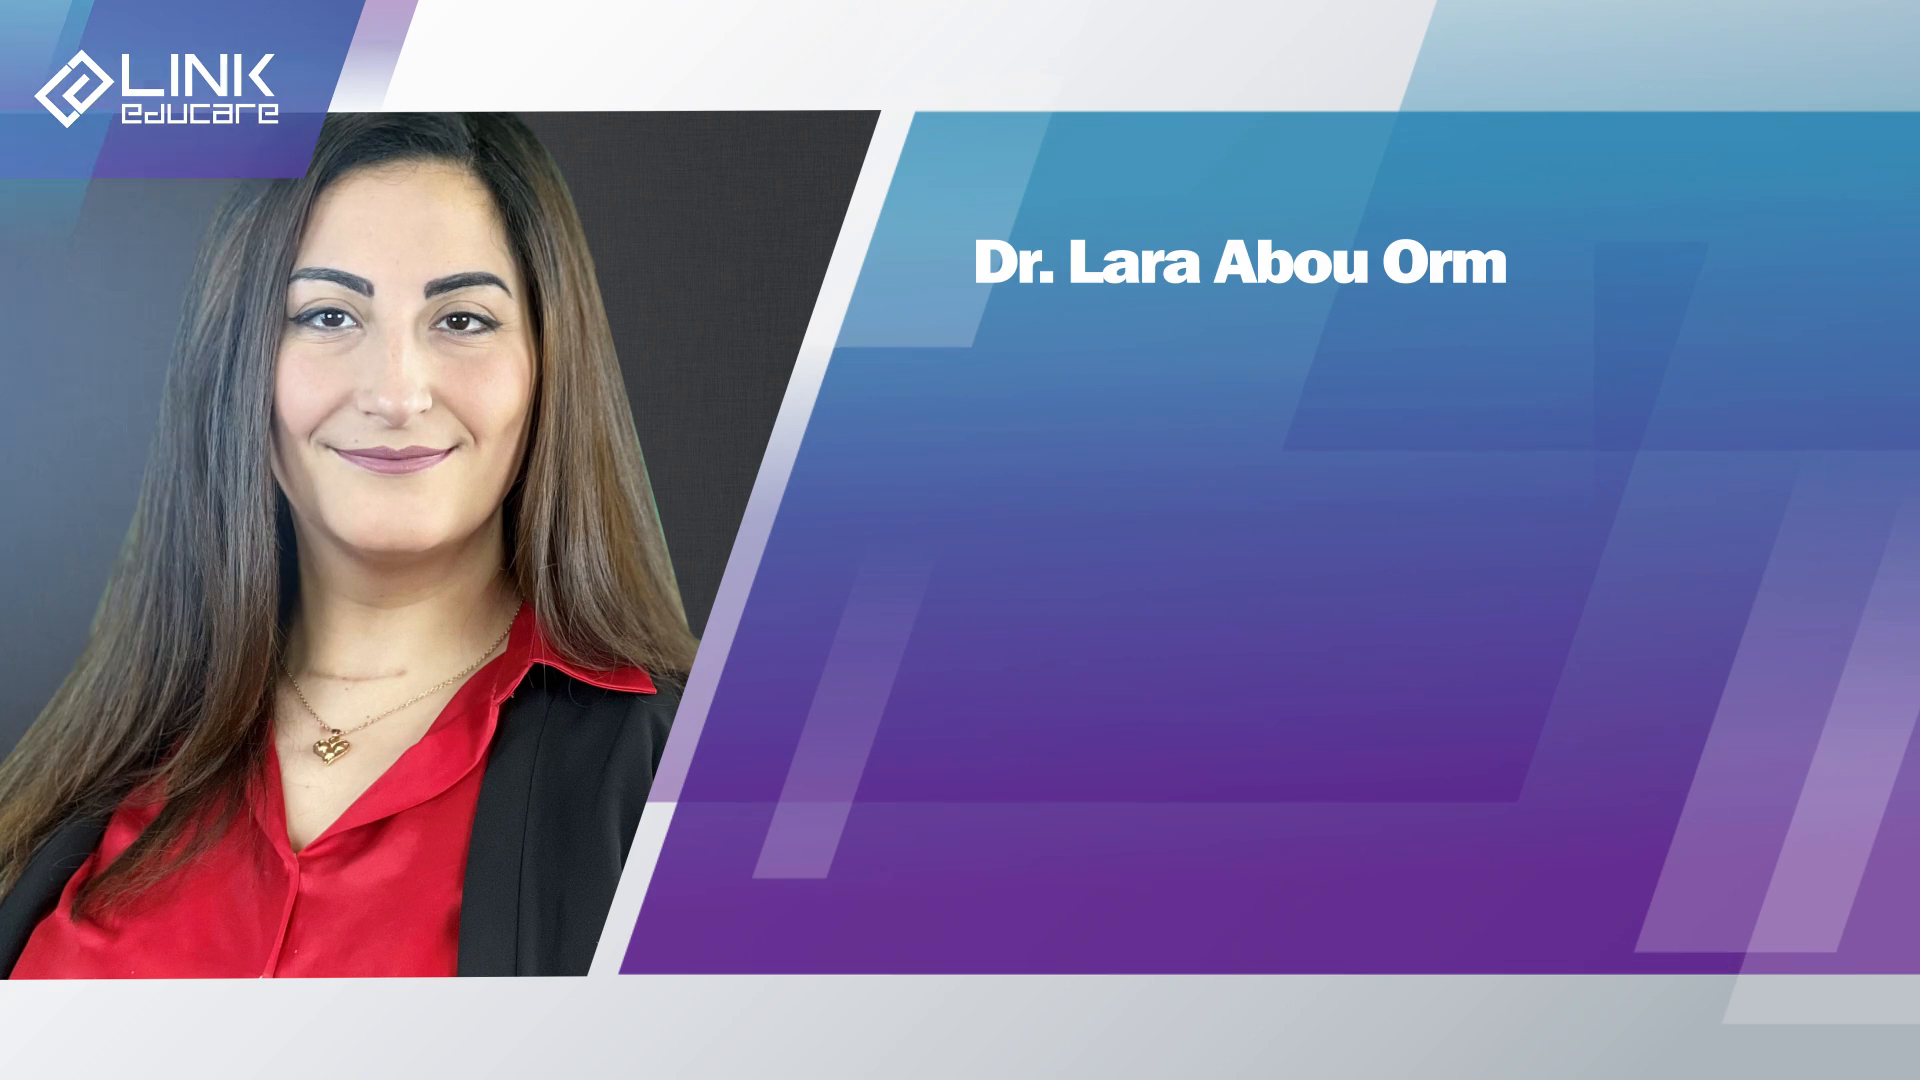 Dr. Lara Abou Orm